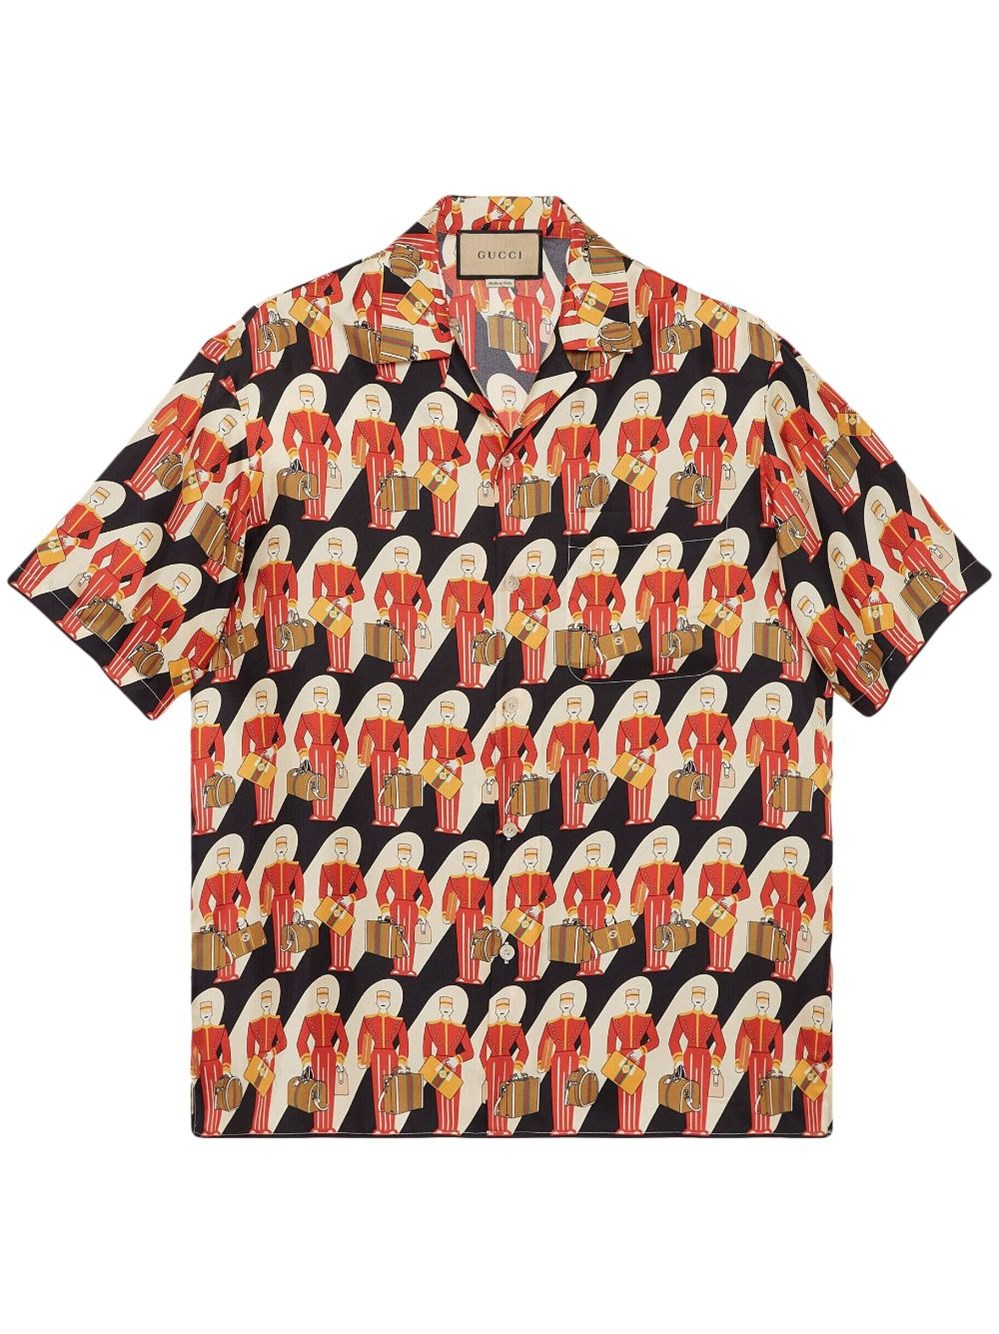 Gucci Man's Printed Bowling Shirt